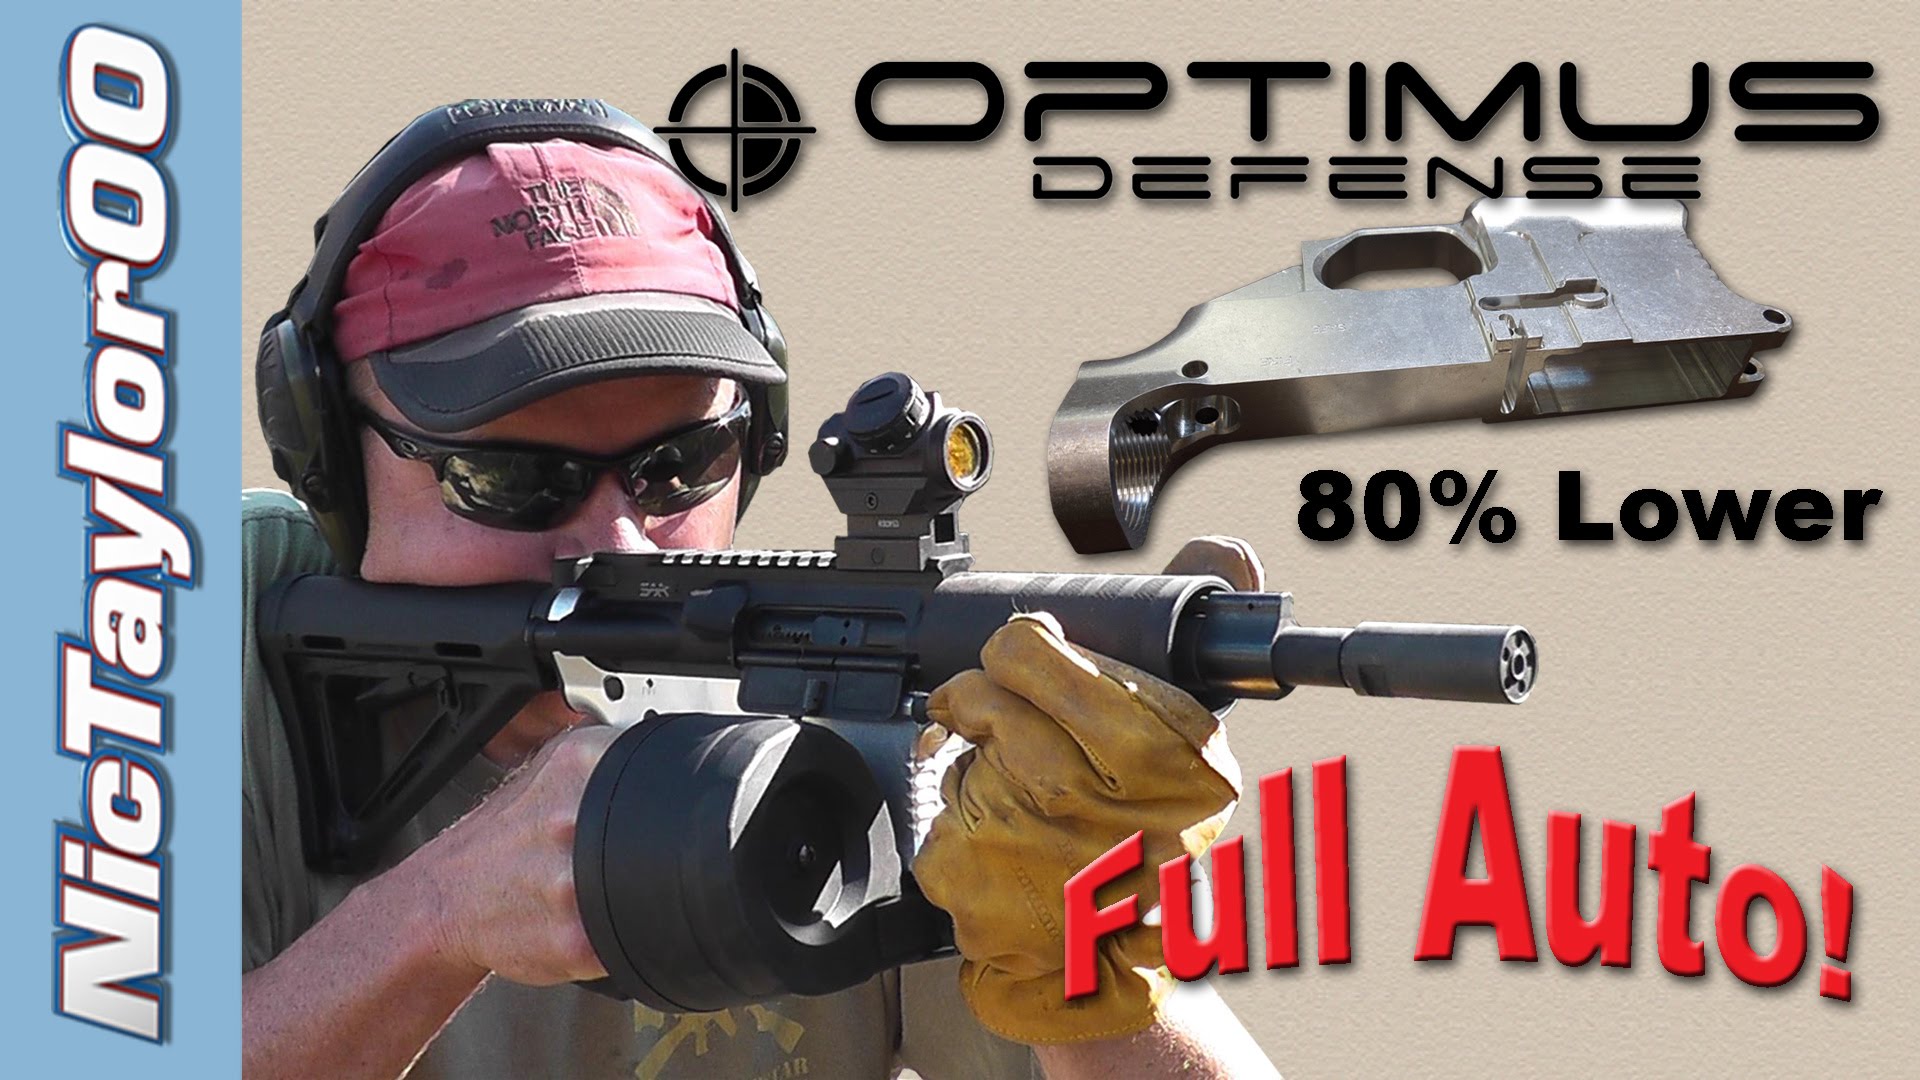 Full Auto 80% Lower - Optimus Defense Billet Review. 